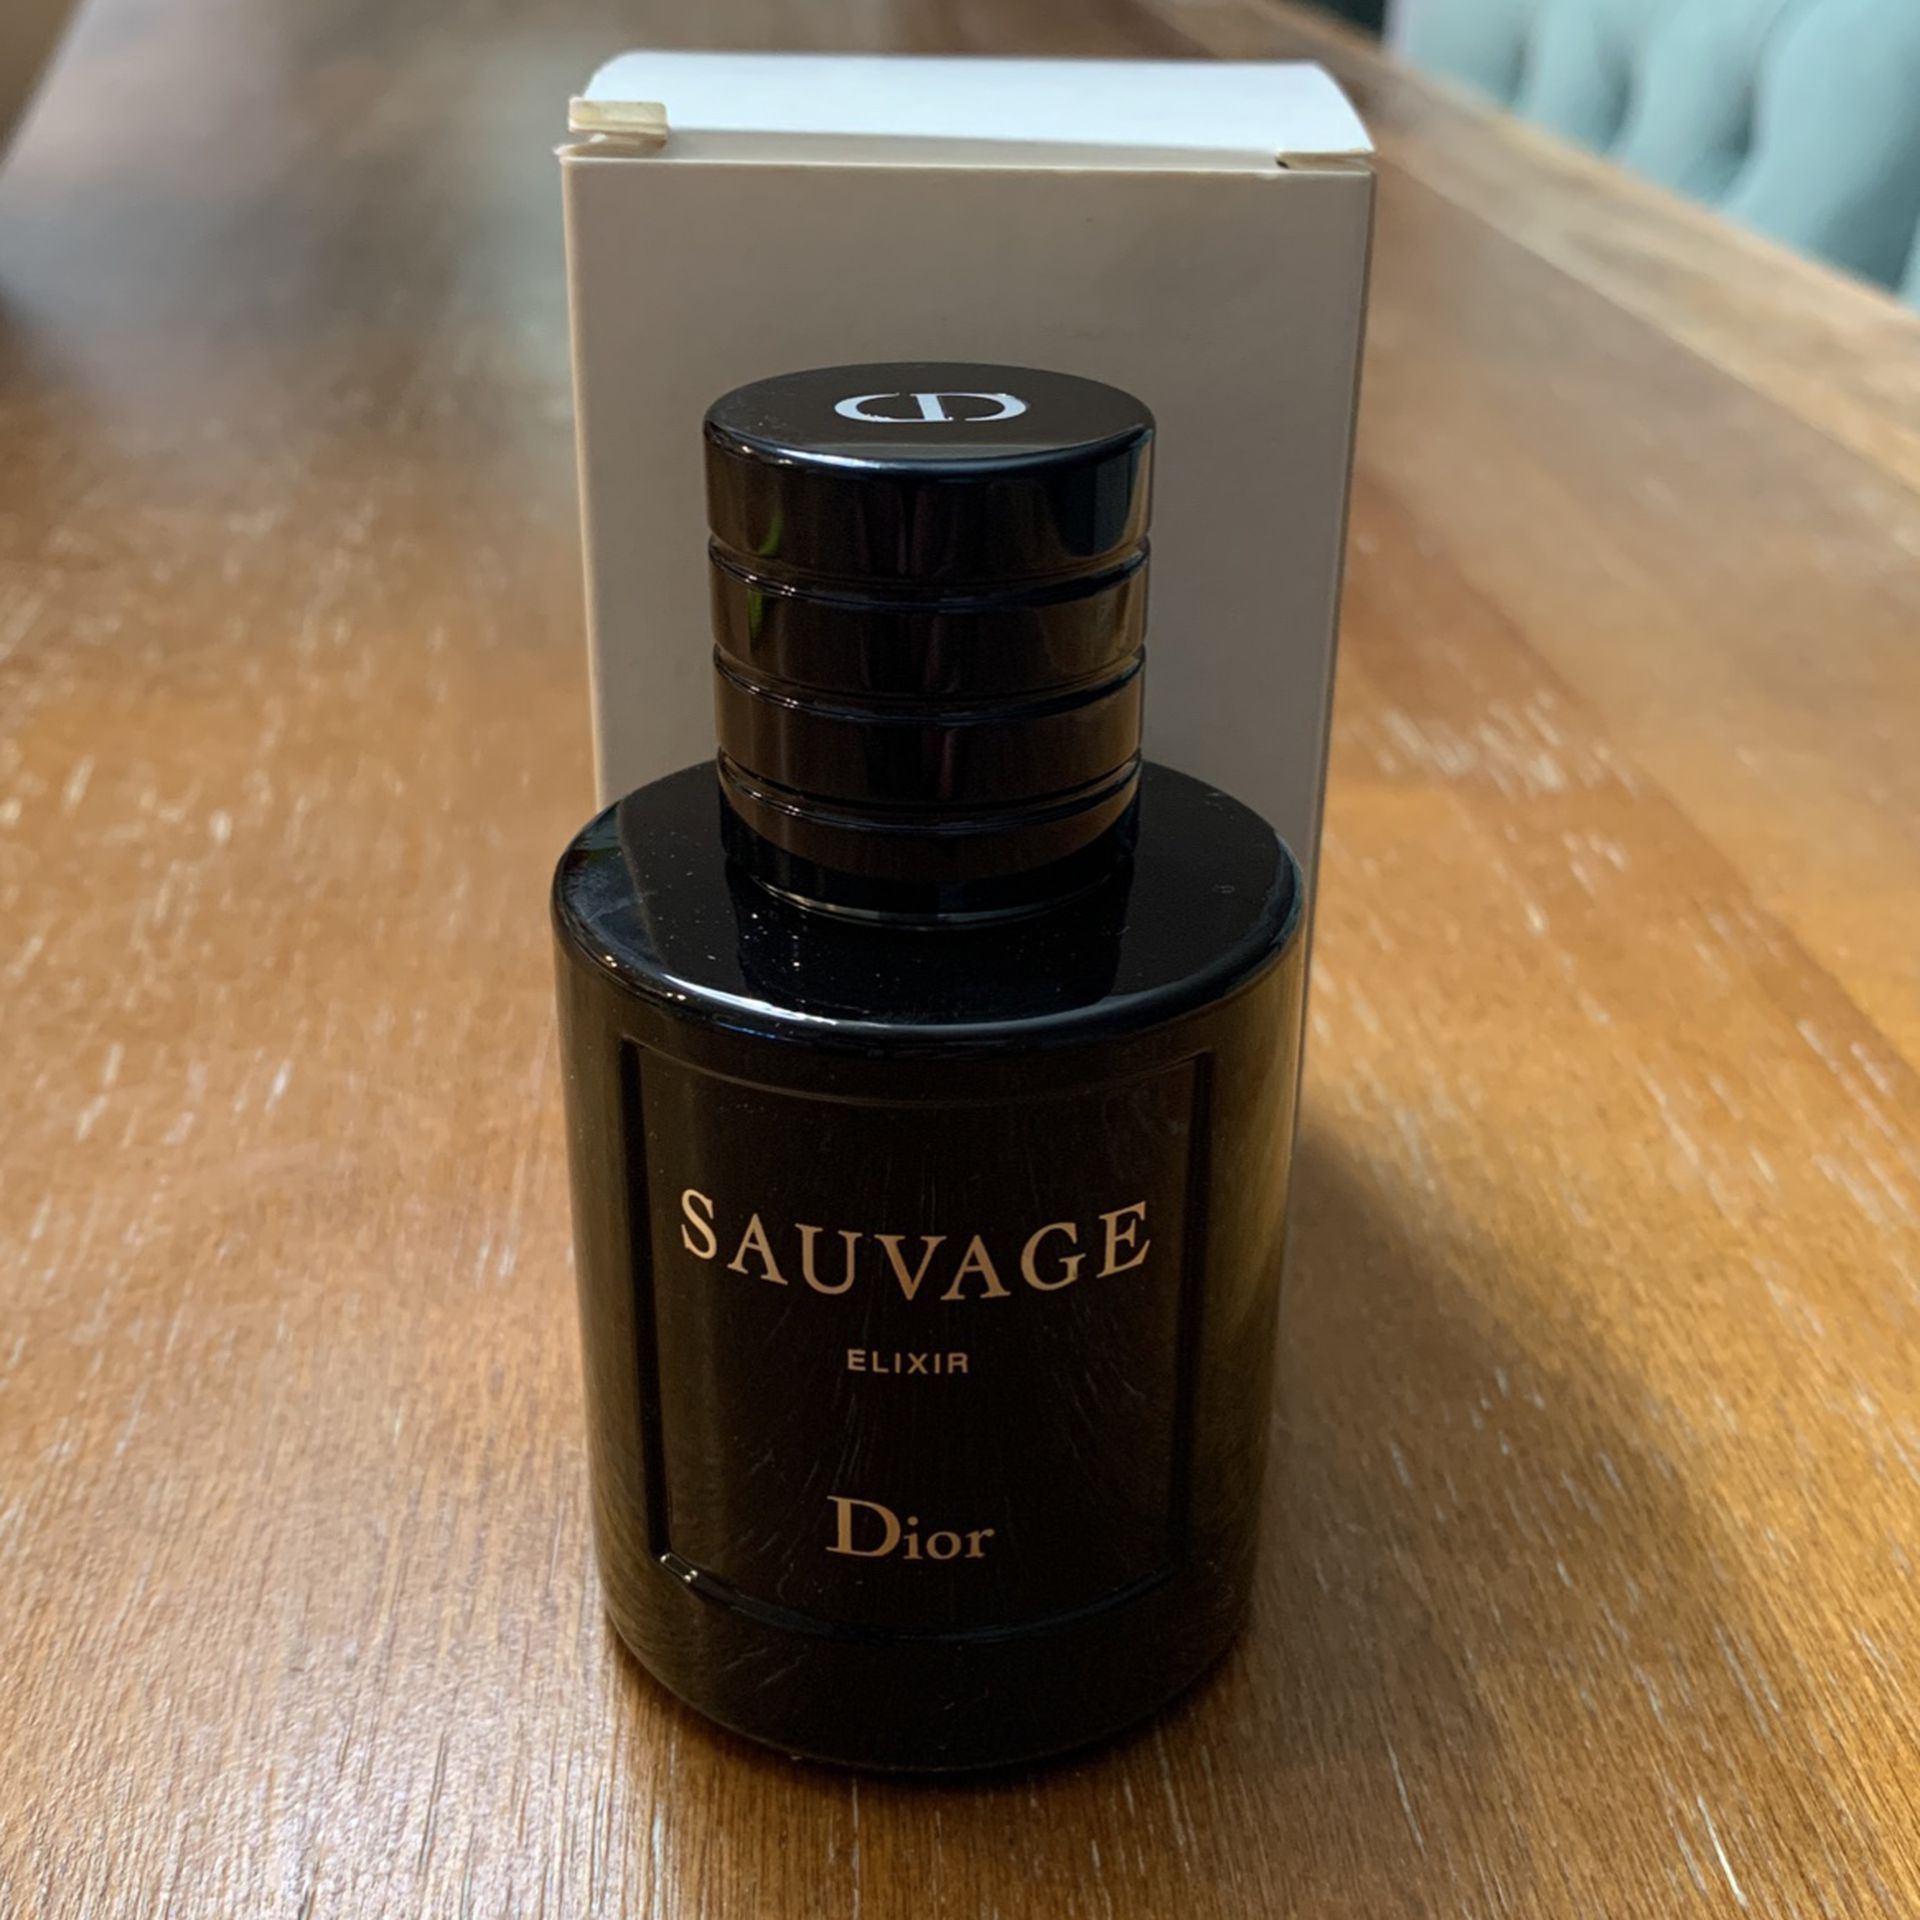 New Dior Sauvage Elixir 